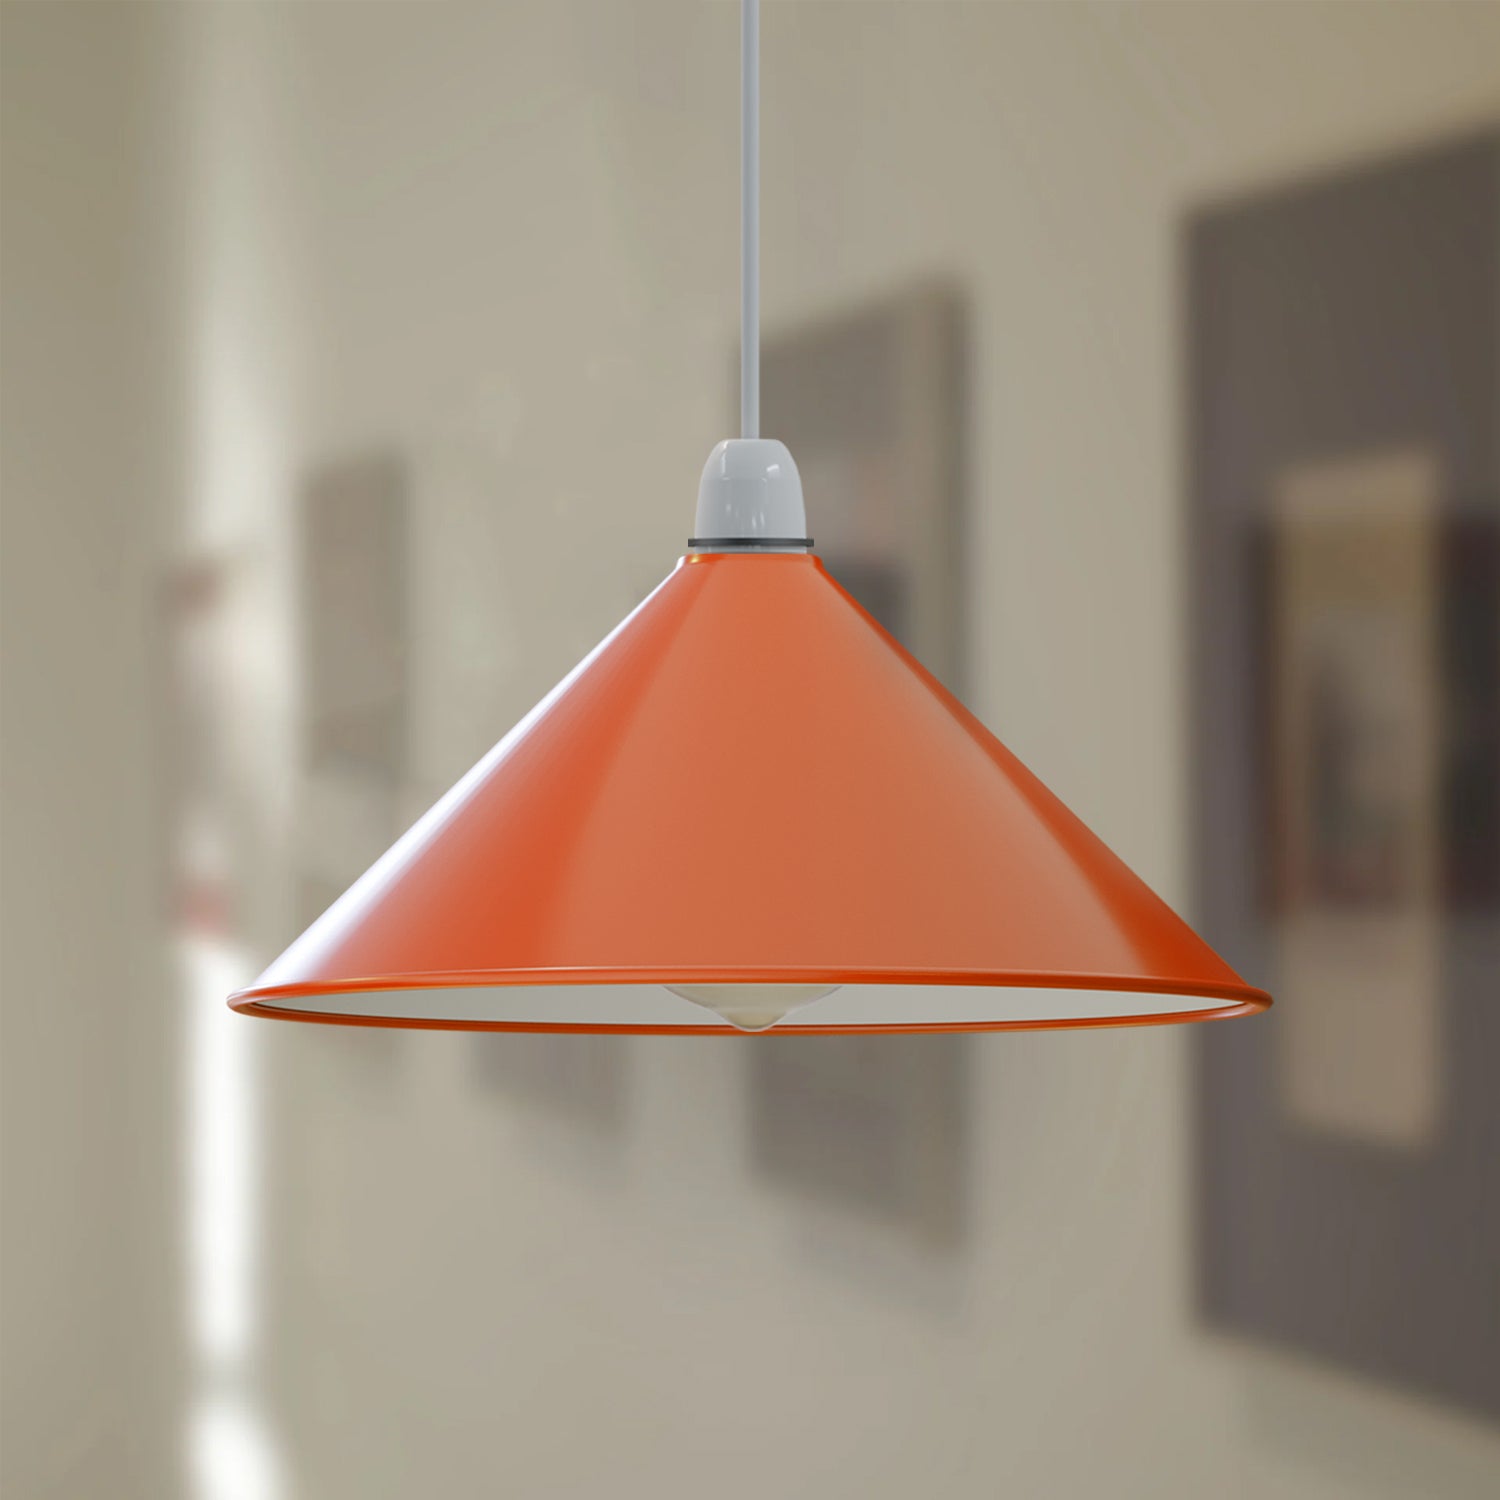 Cone Style Lamp Shade